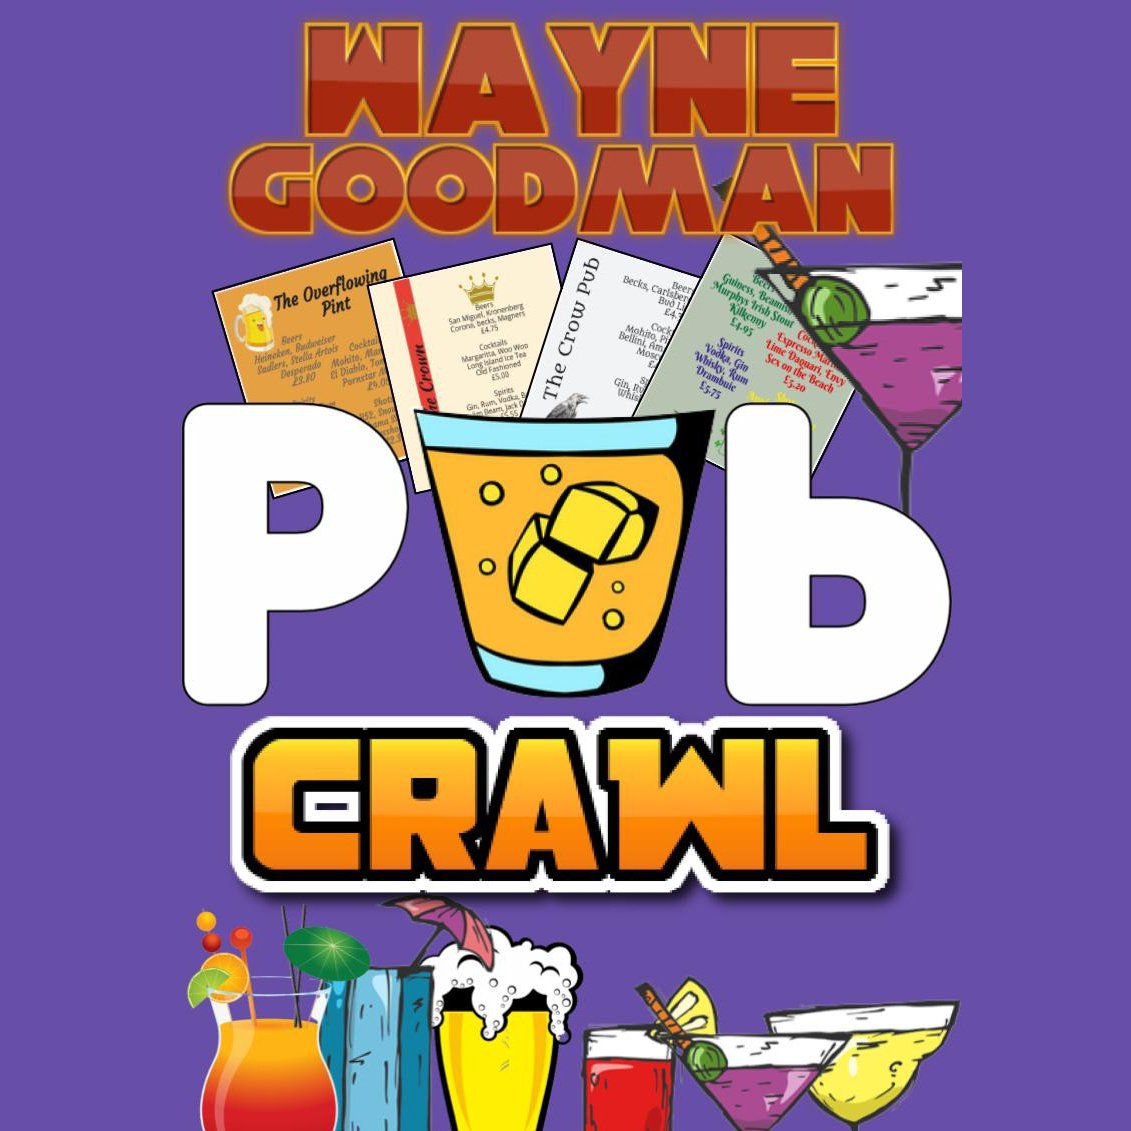 Pub Crawl by Wayne Goodman